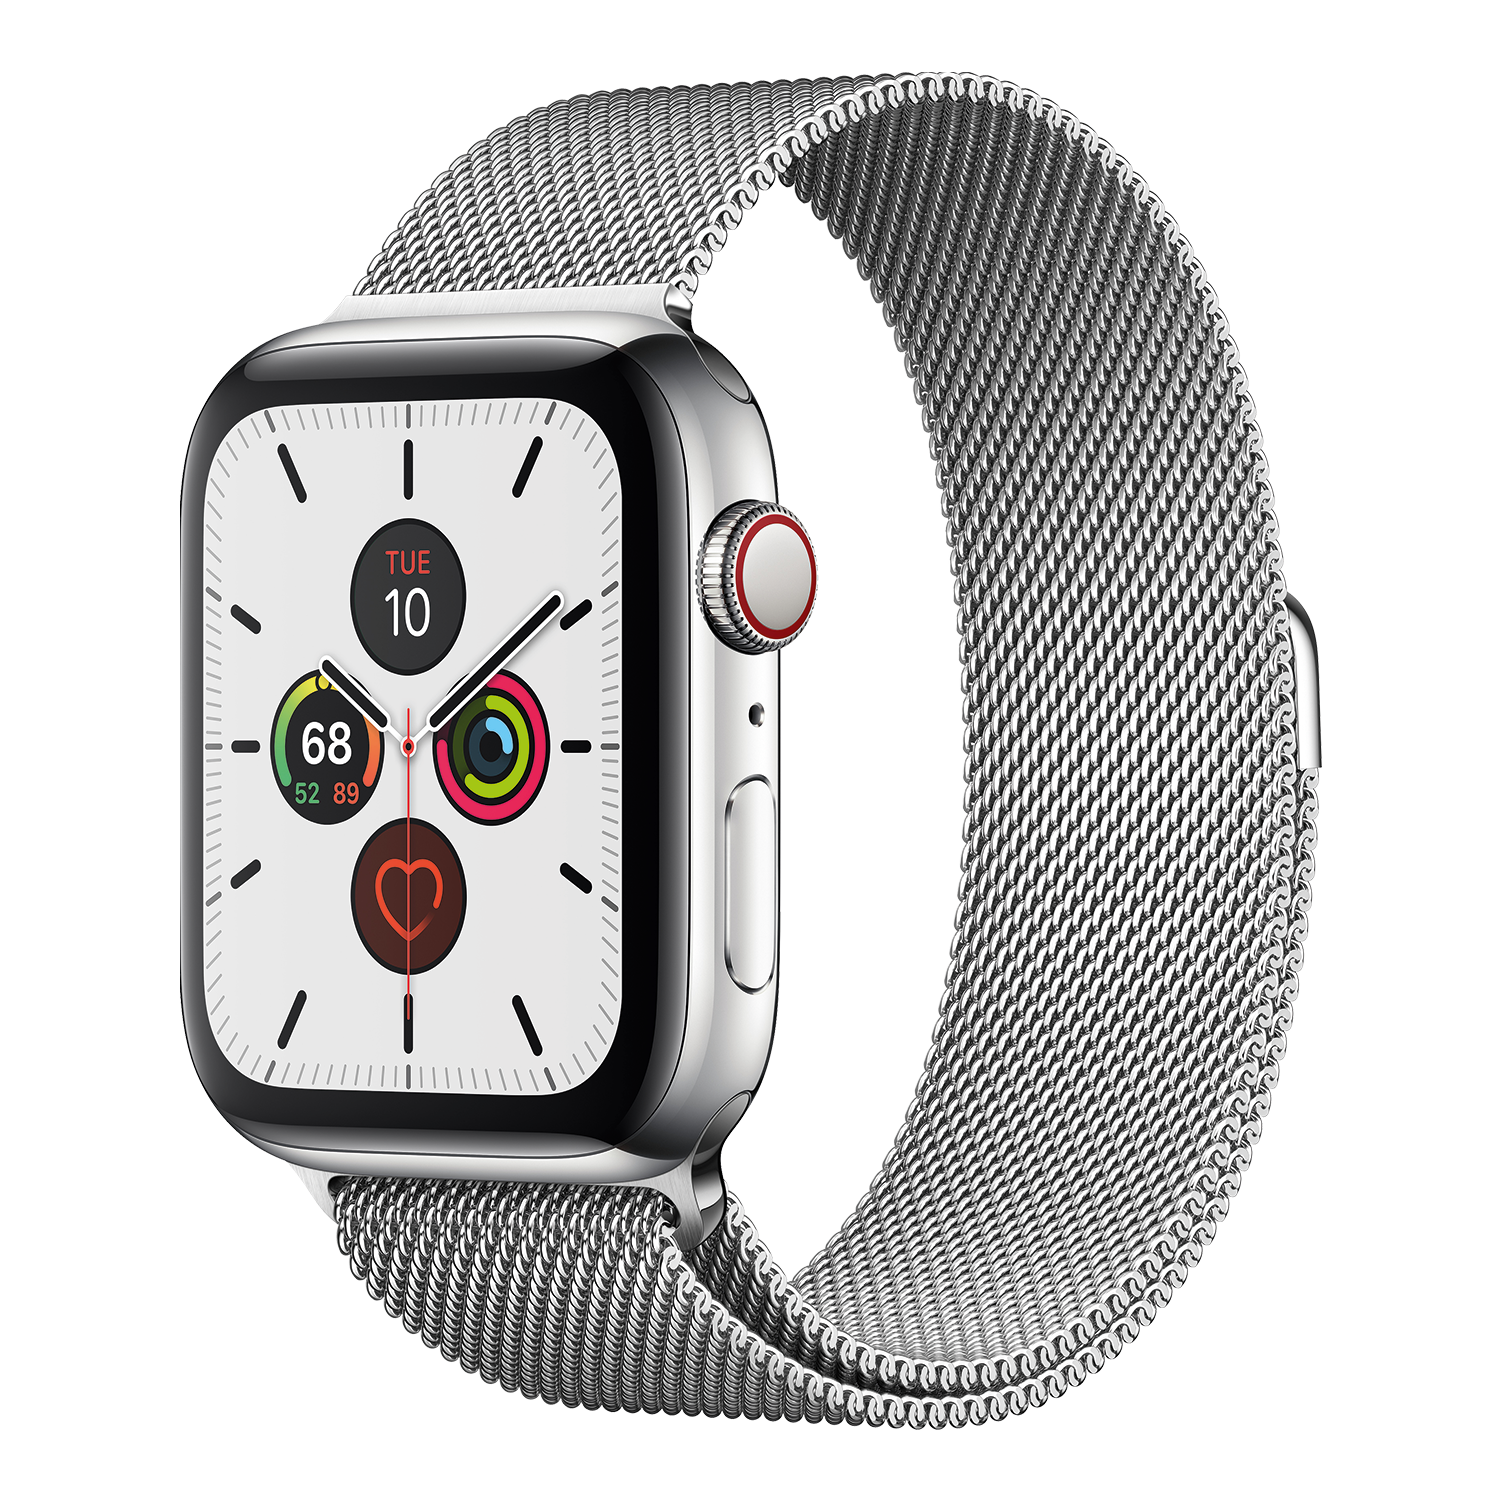 Apple Watch Series 6 Photo